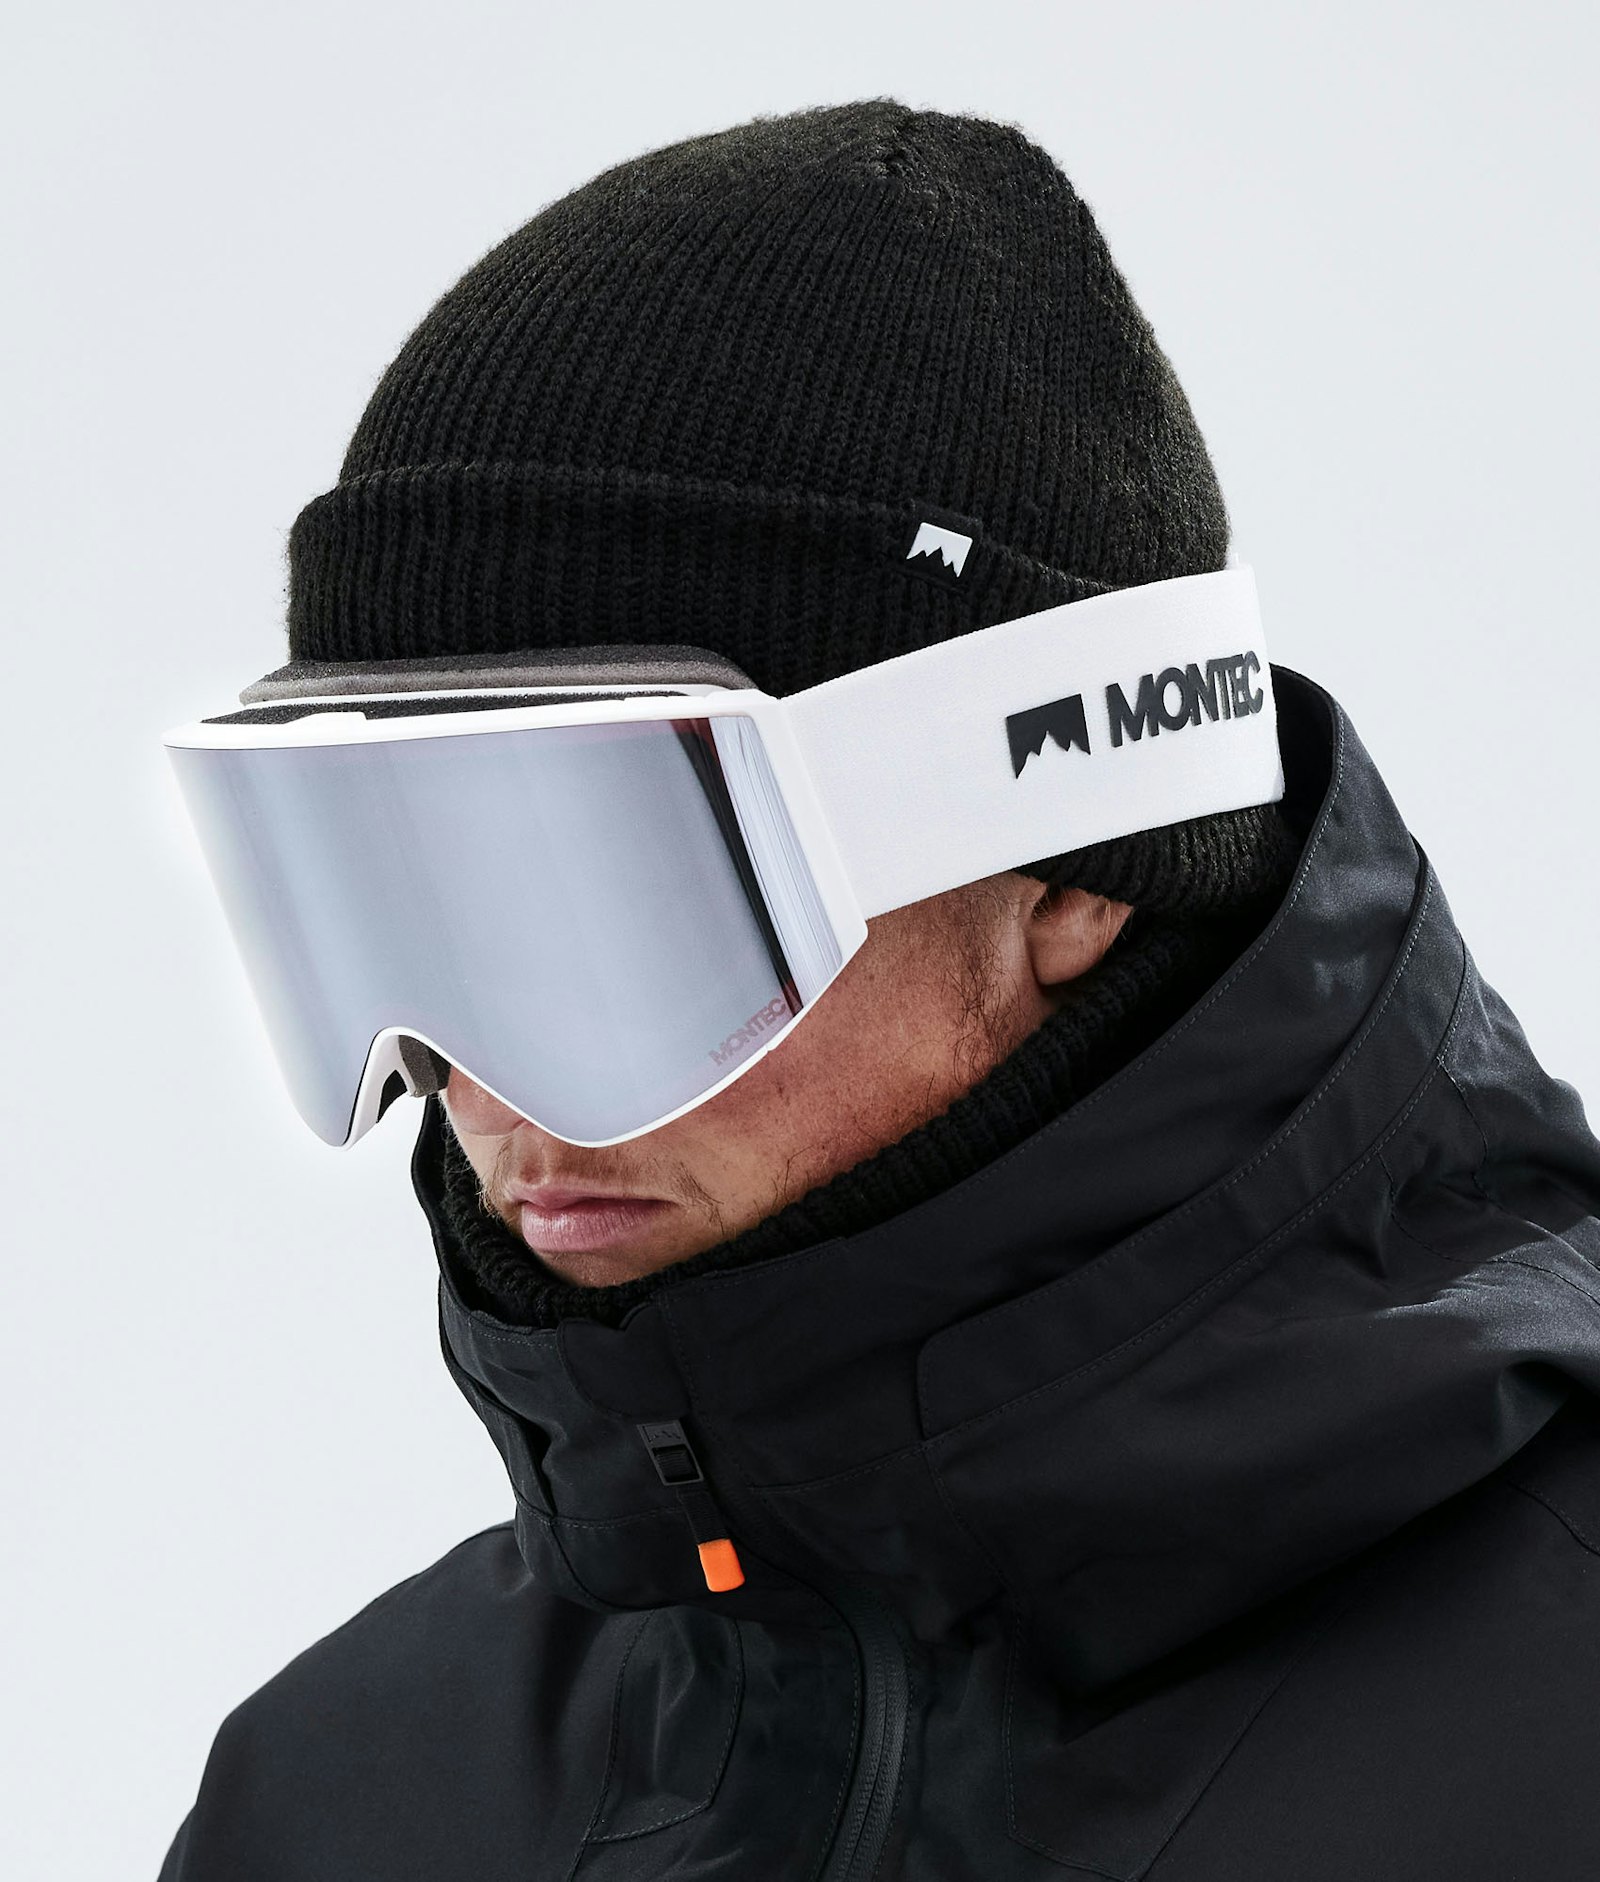 Montec Scope 2021 Skibriller White/Black Mirror